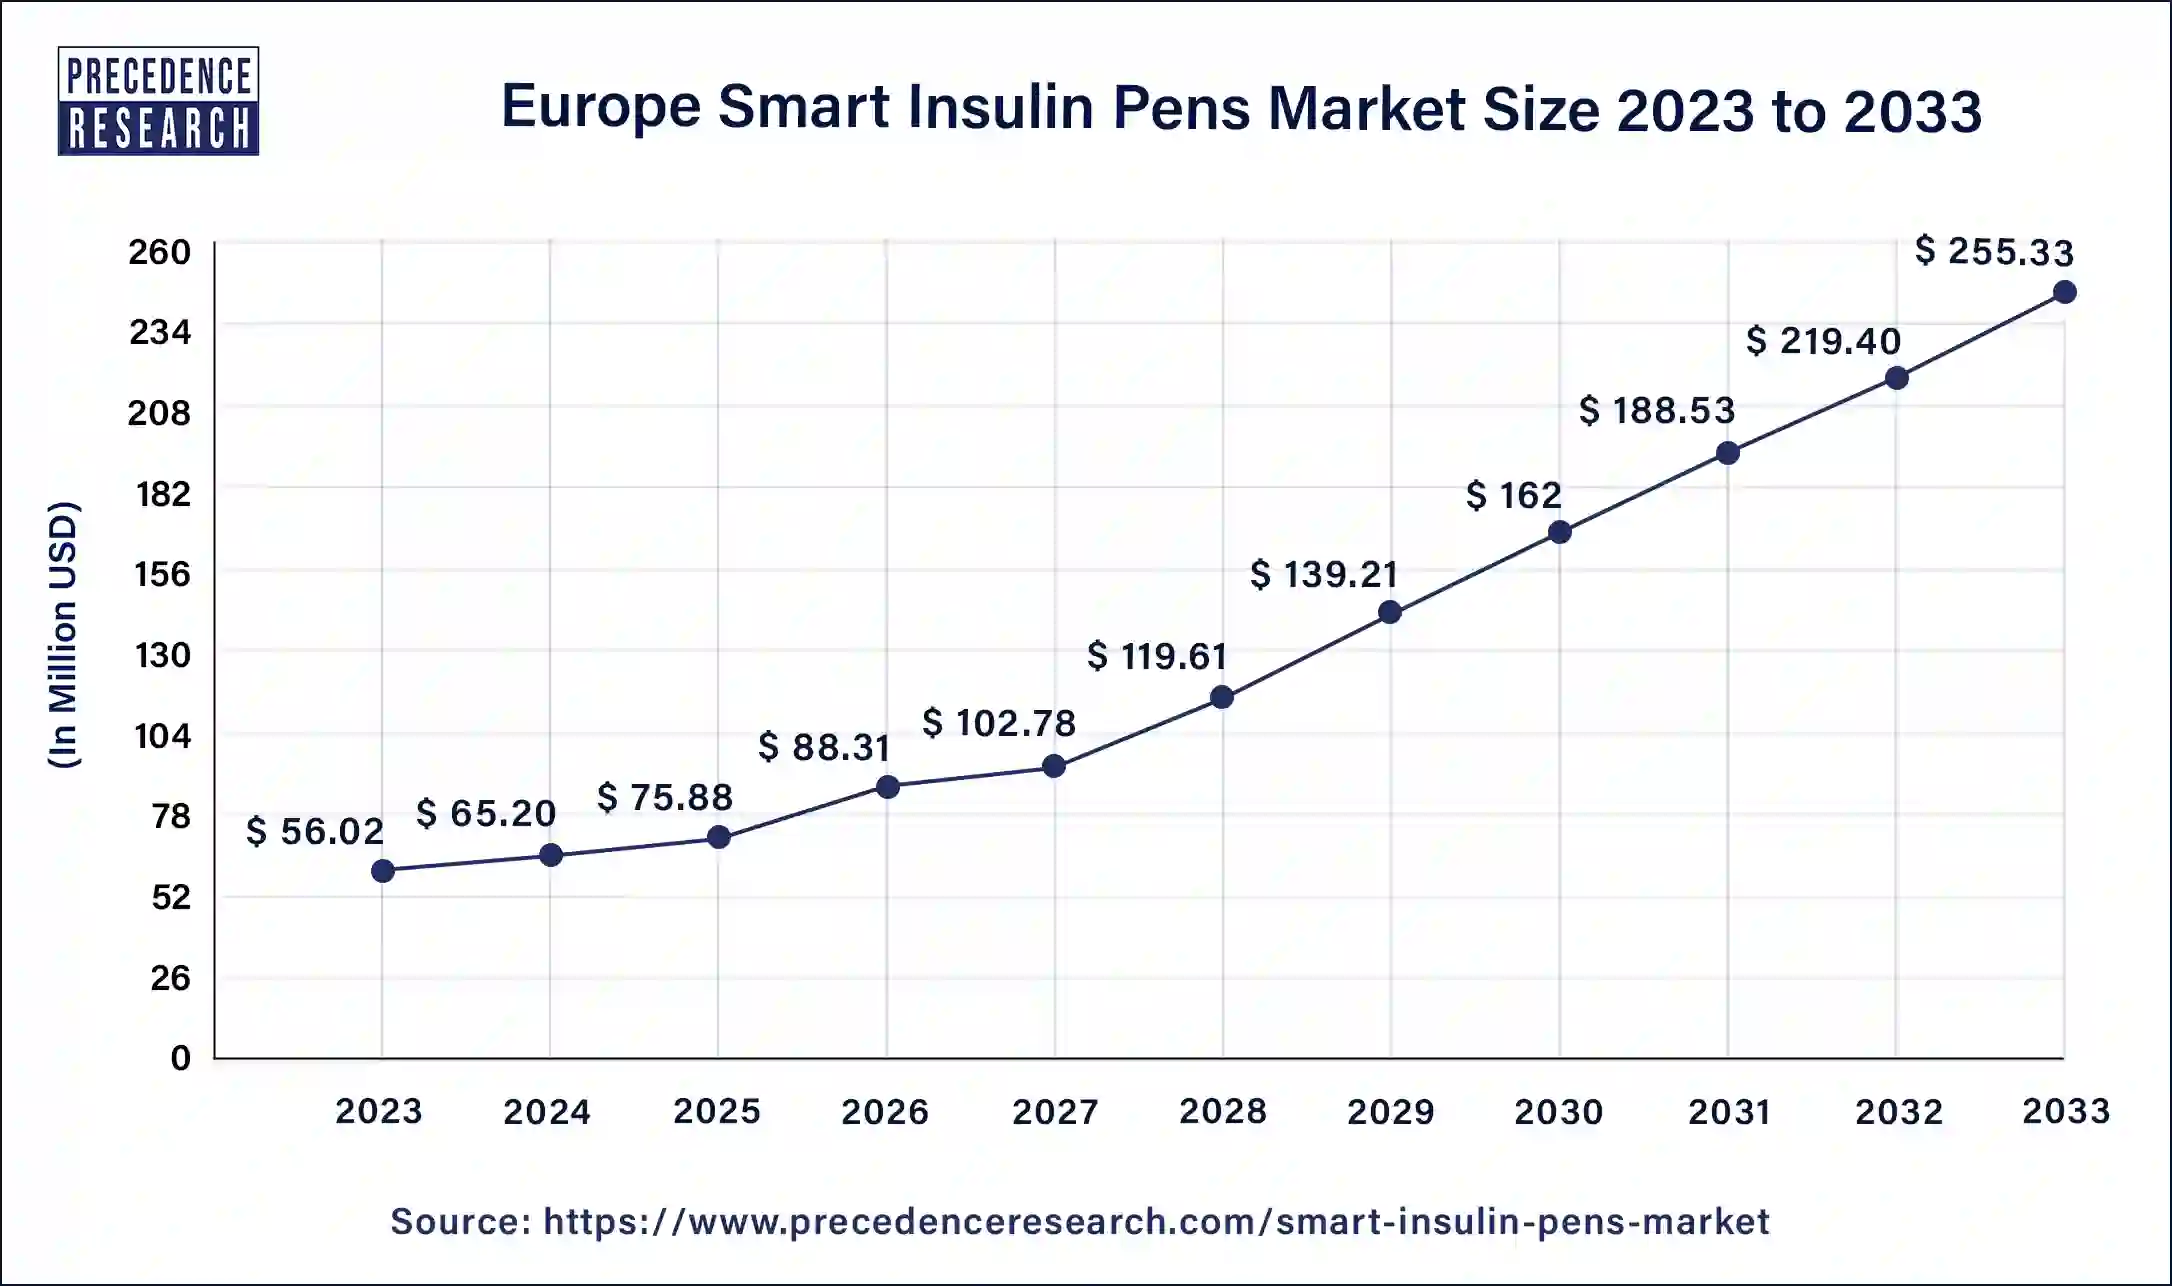 Europe Smart Insulin Pens Market Size 2024 to 2033